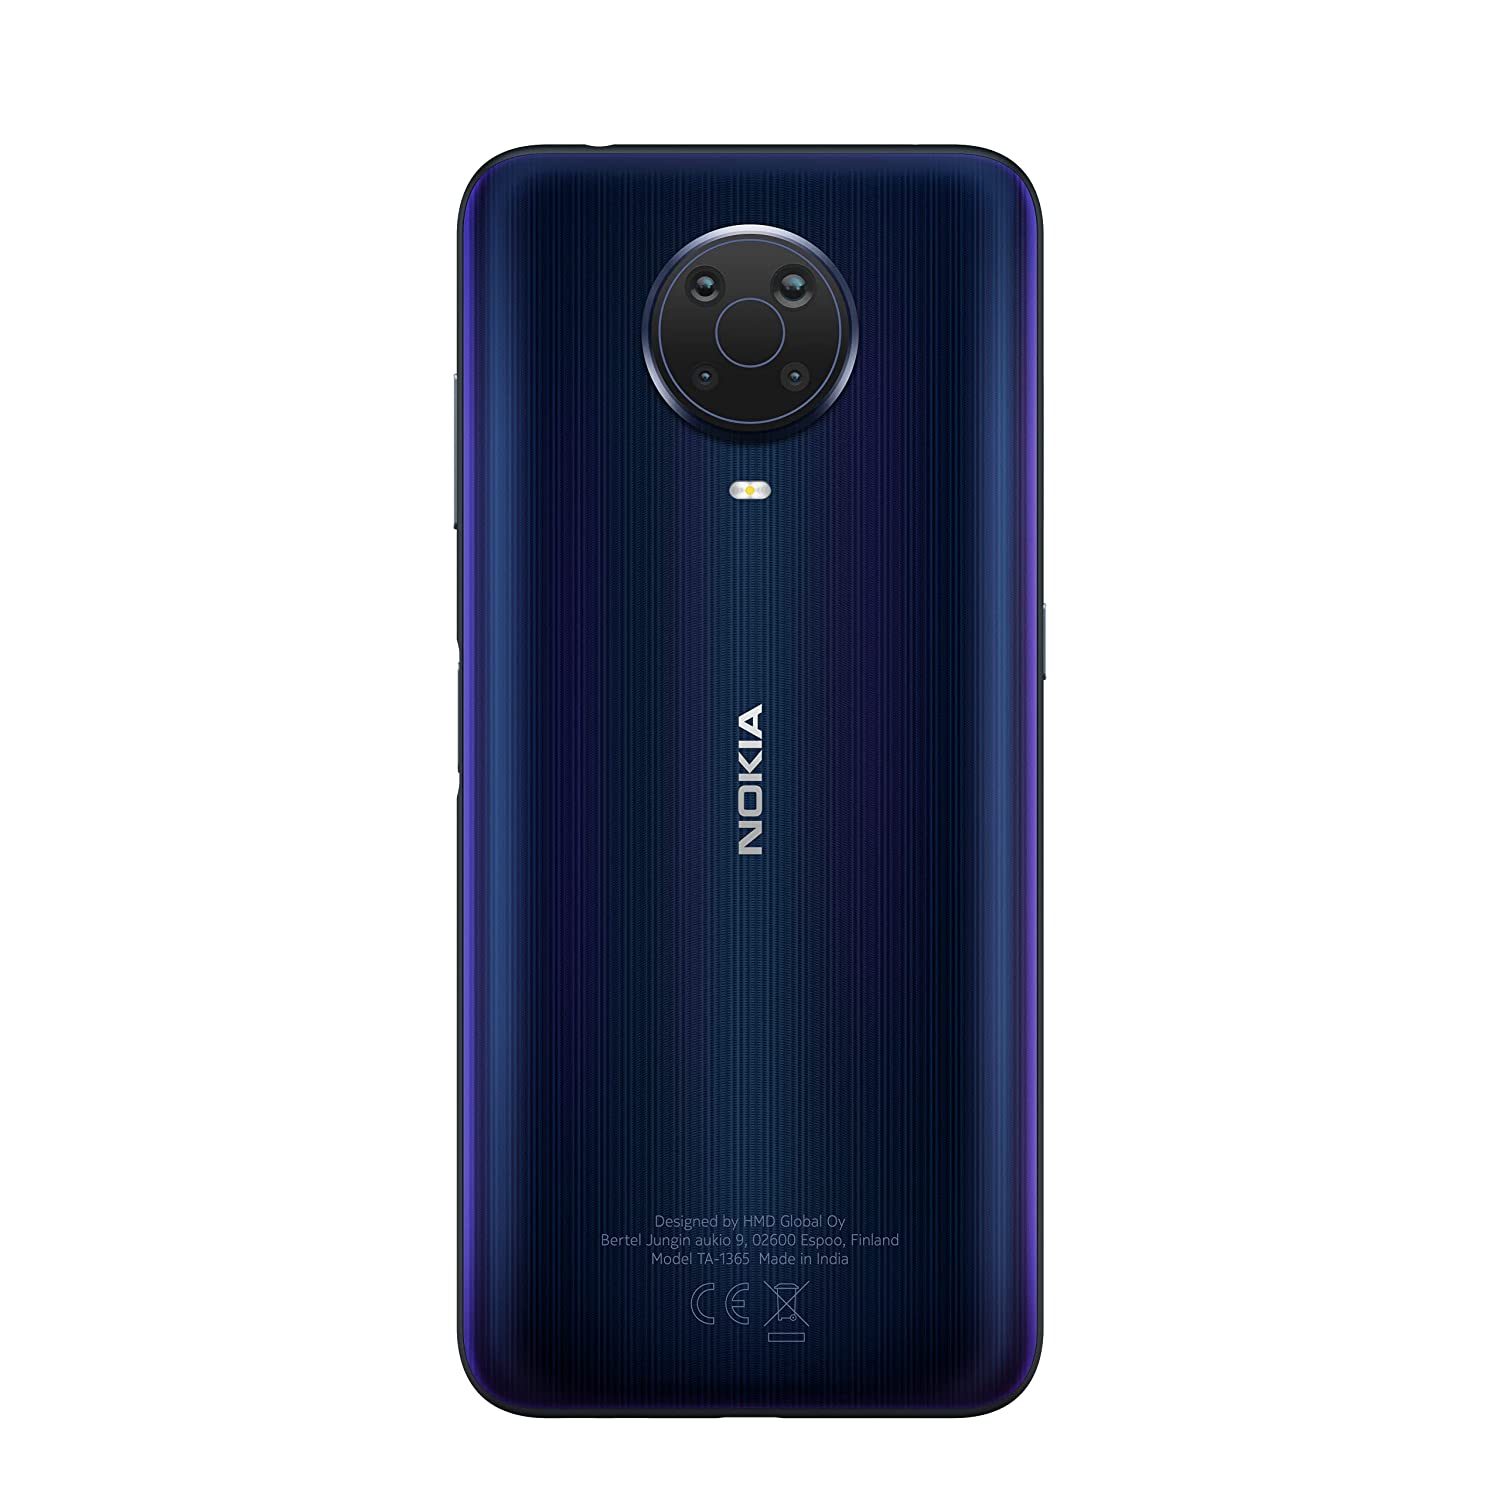 Nokia G20 Smartphone